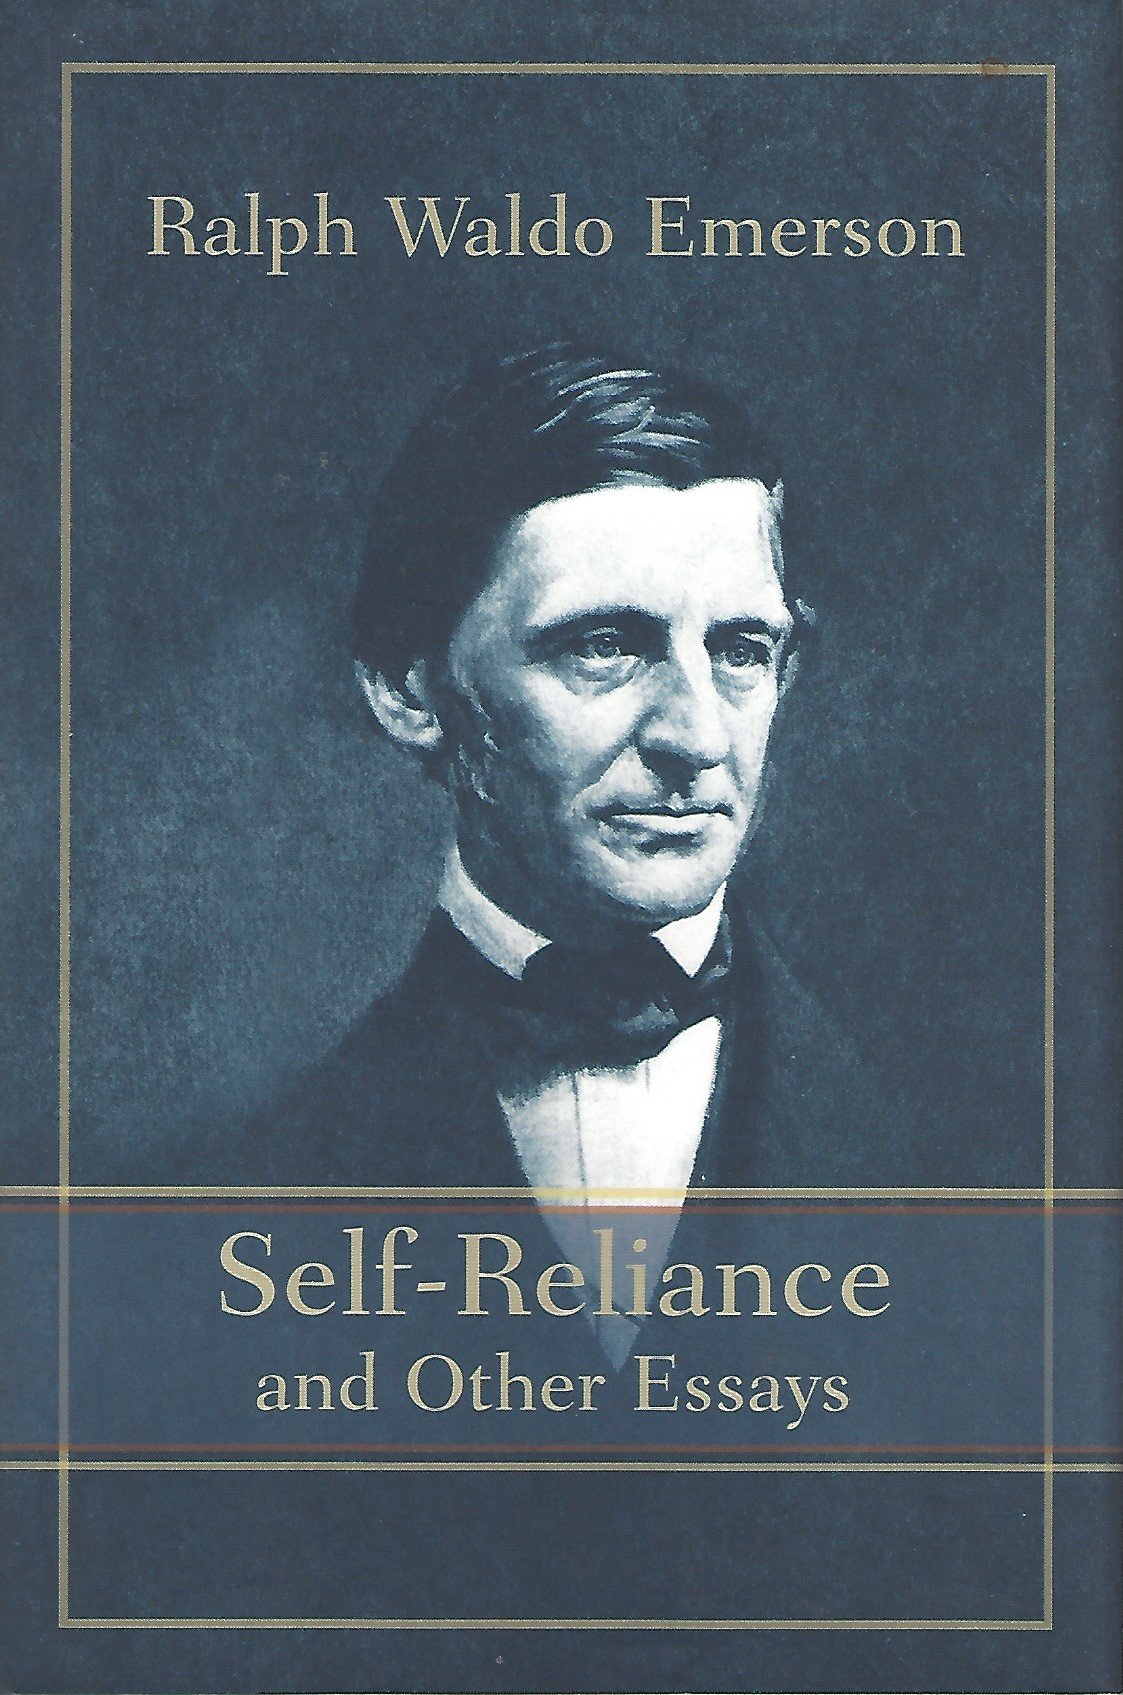 self-reliance book cover.jpg